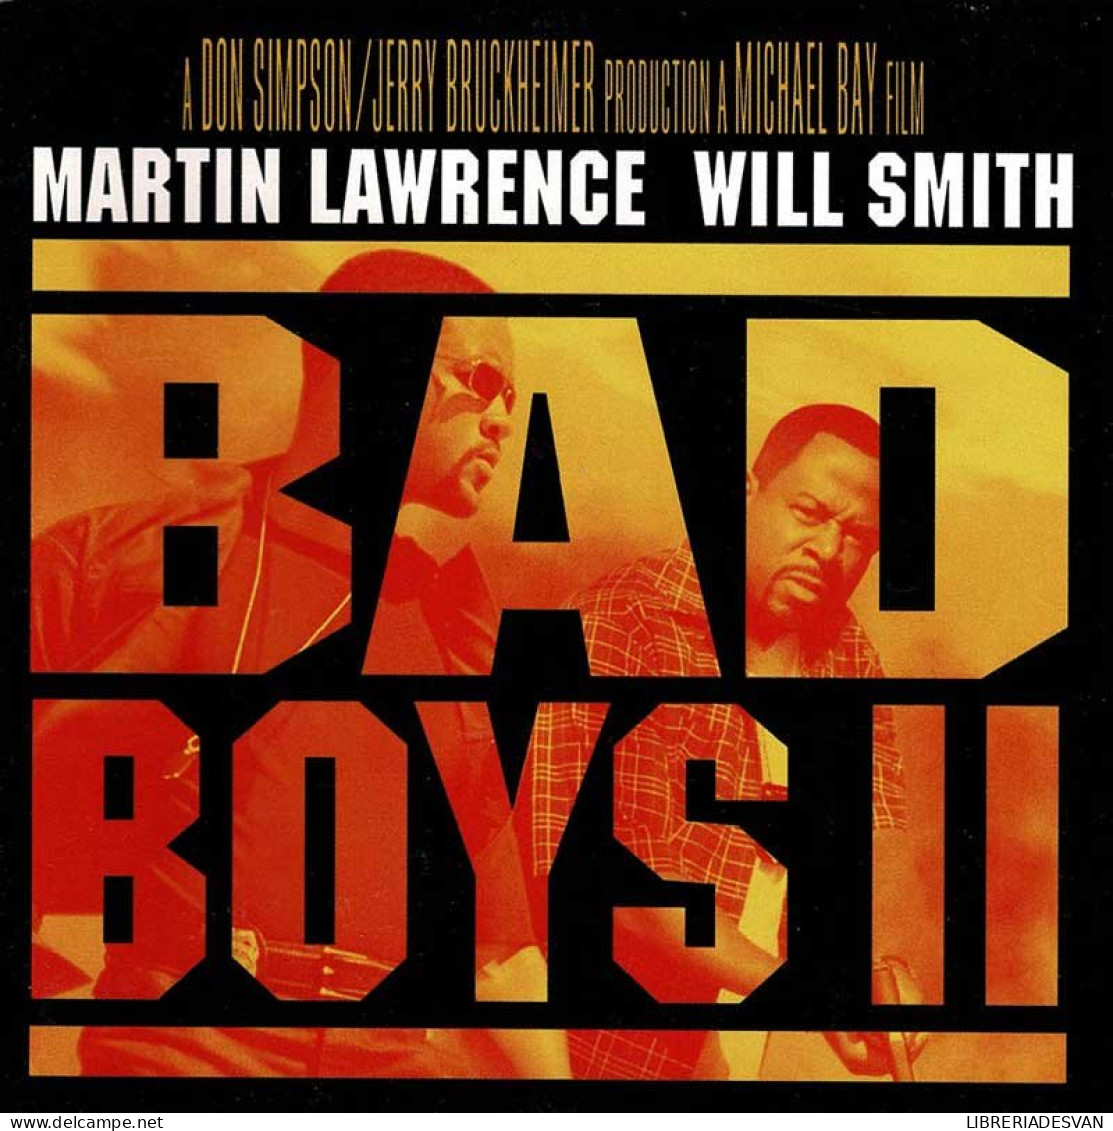 Bad Boys II - The Soundtrack. CD - Filmmusik